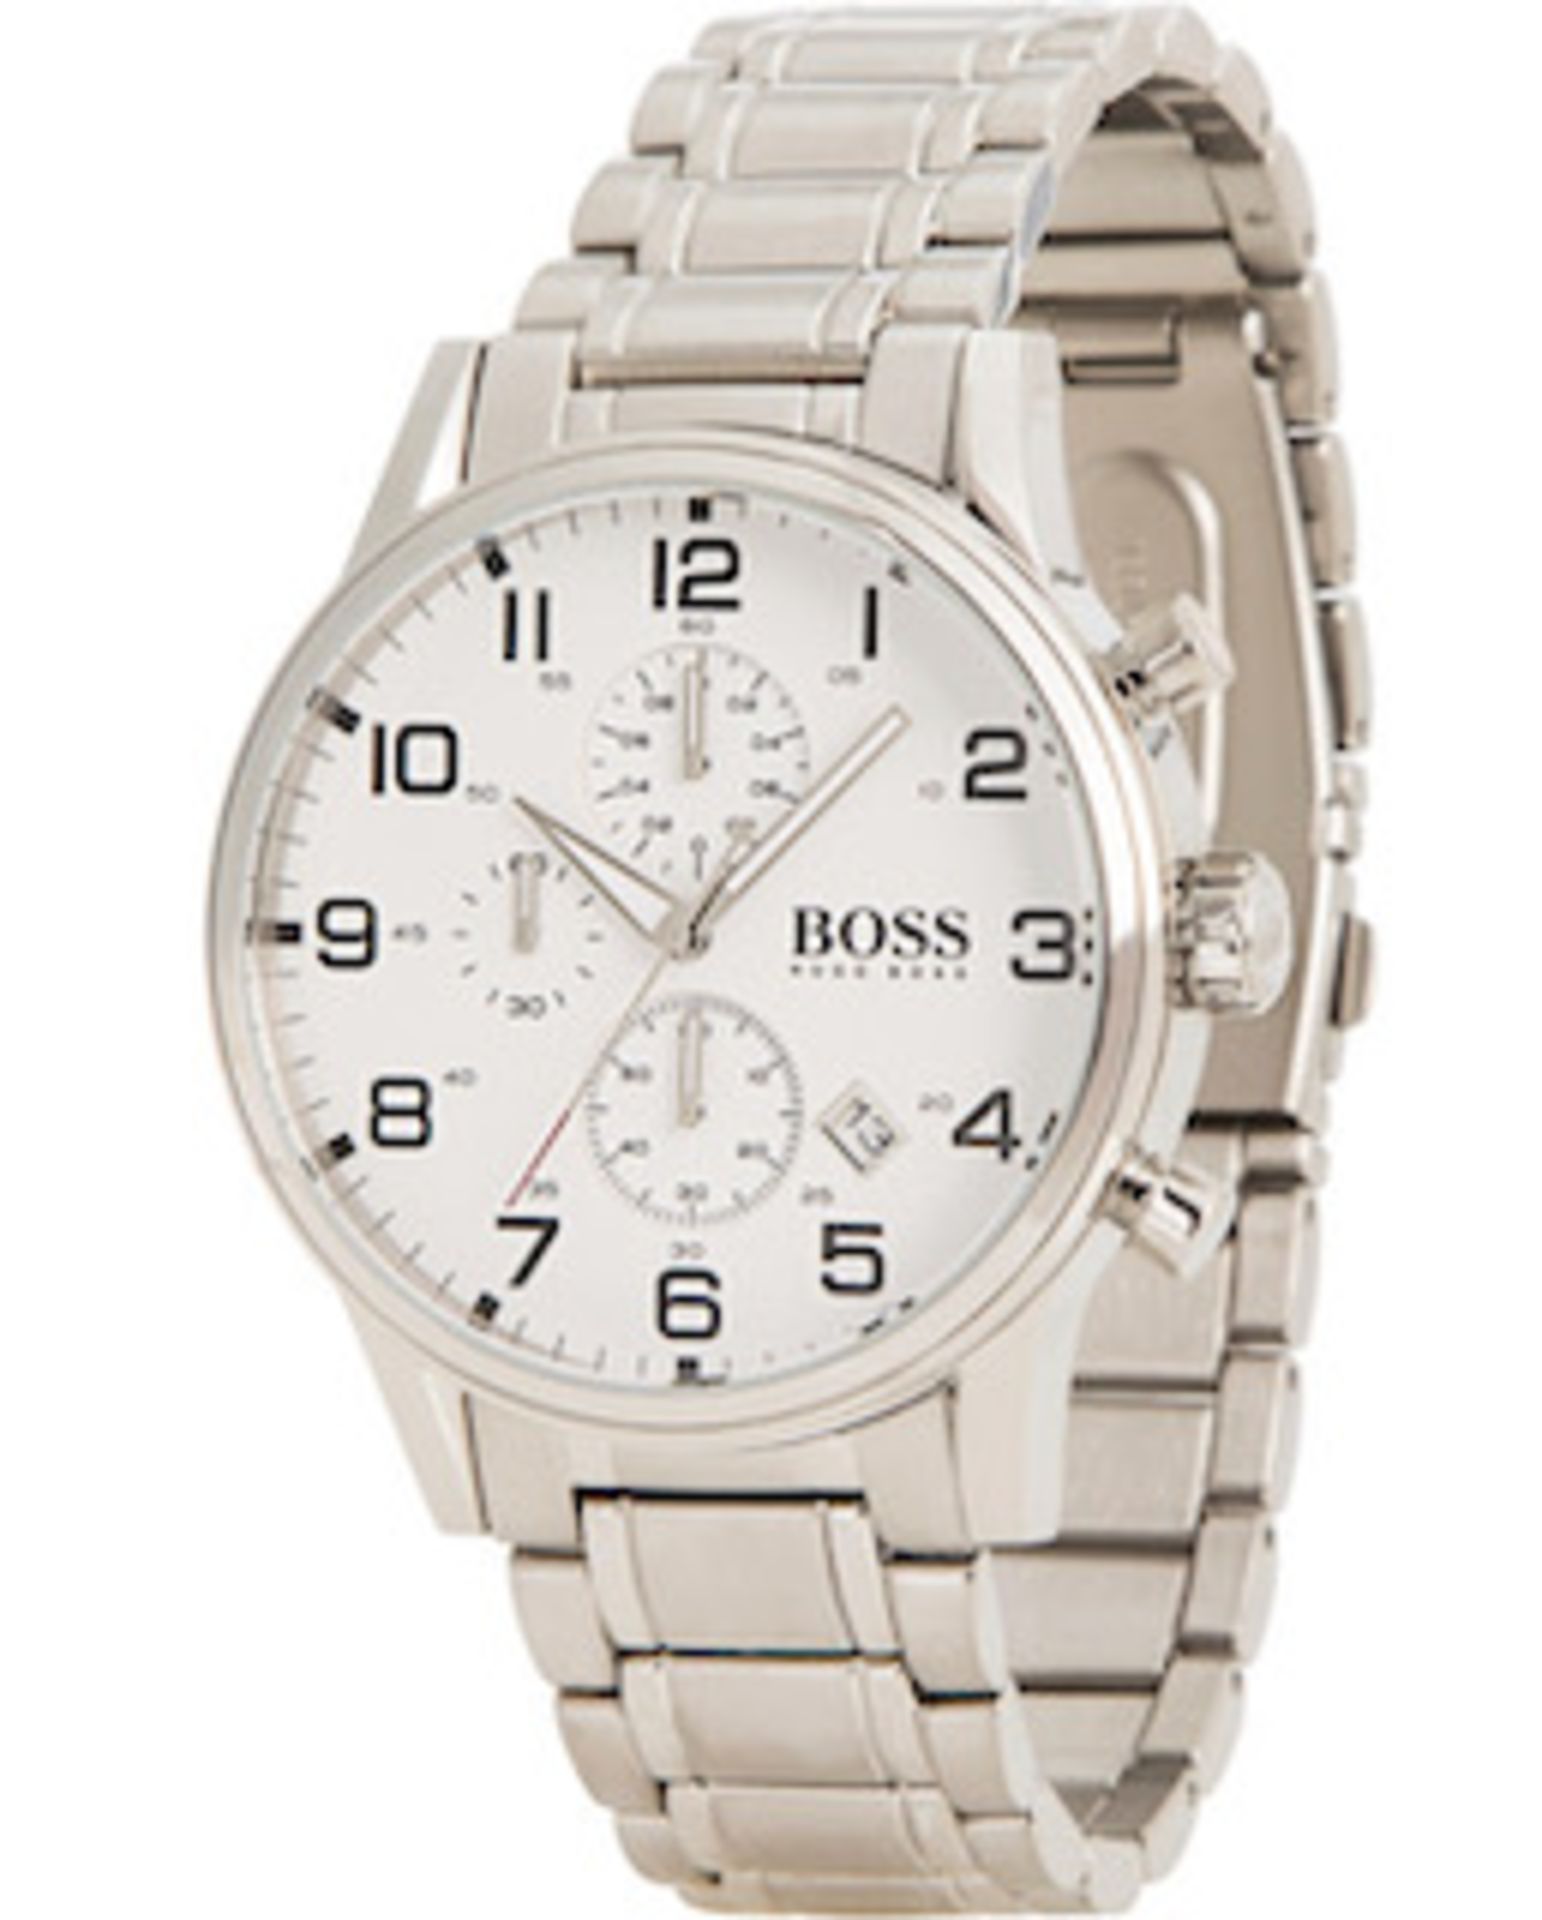 HUGO BOSS Men's Aeroliner Silver Bracelet Chronograph Watch 1513182 - Image 7 of 7